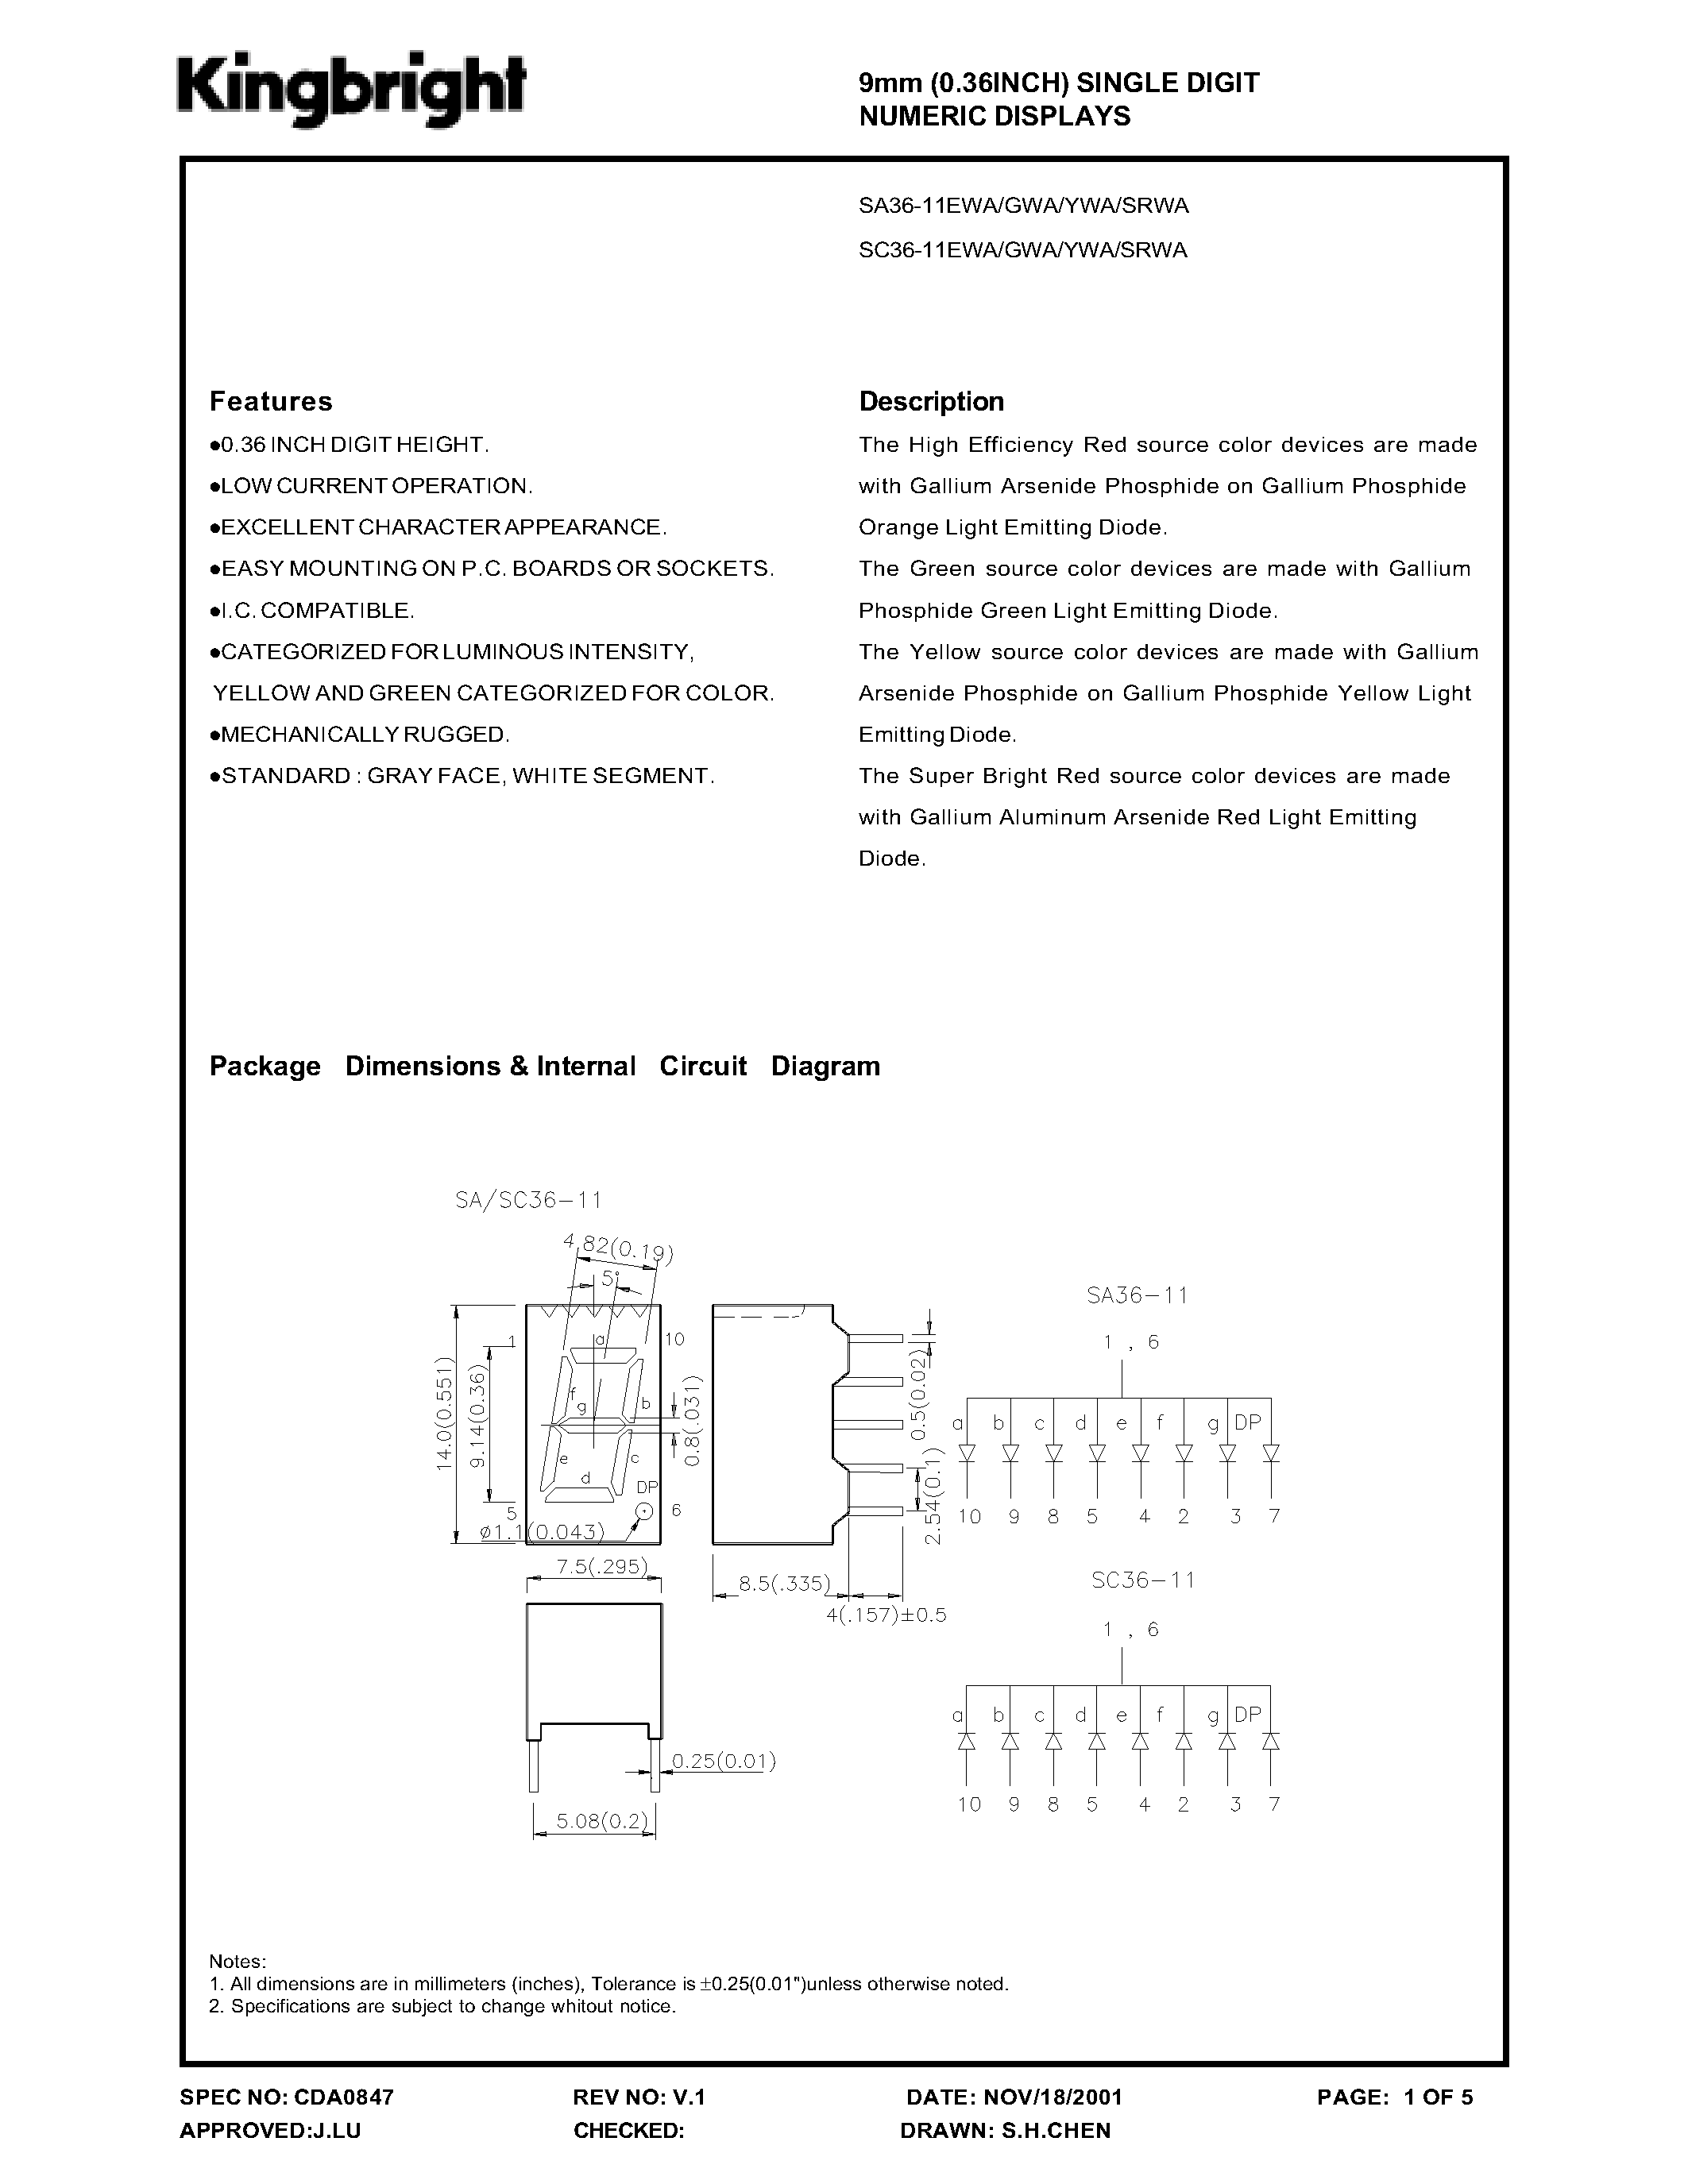 Datasheet SA36-11EWA - 9mm(0.36INCH) SINGLE DIGIT NUMERIC DISPLAYS page 1